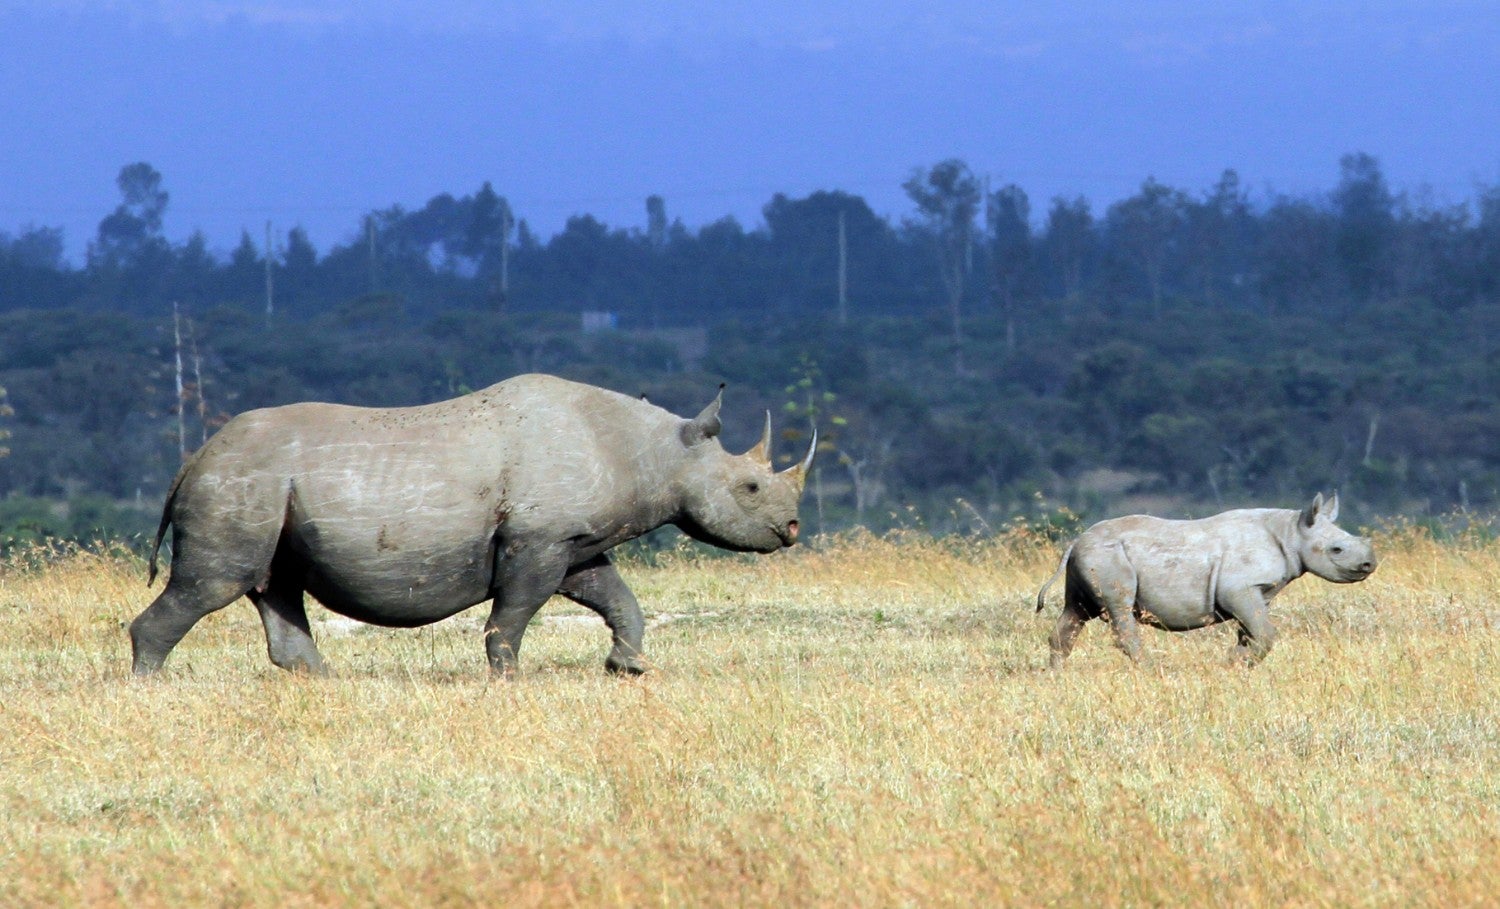 Rhino conservation has continued despite the coronavirus pandemic